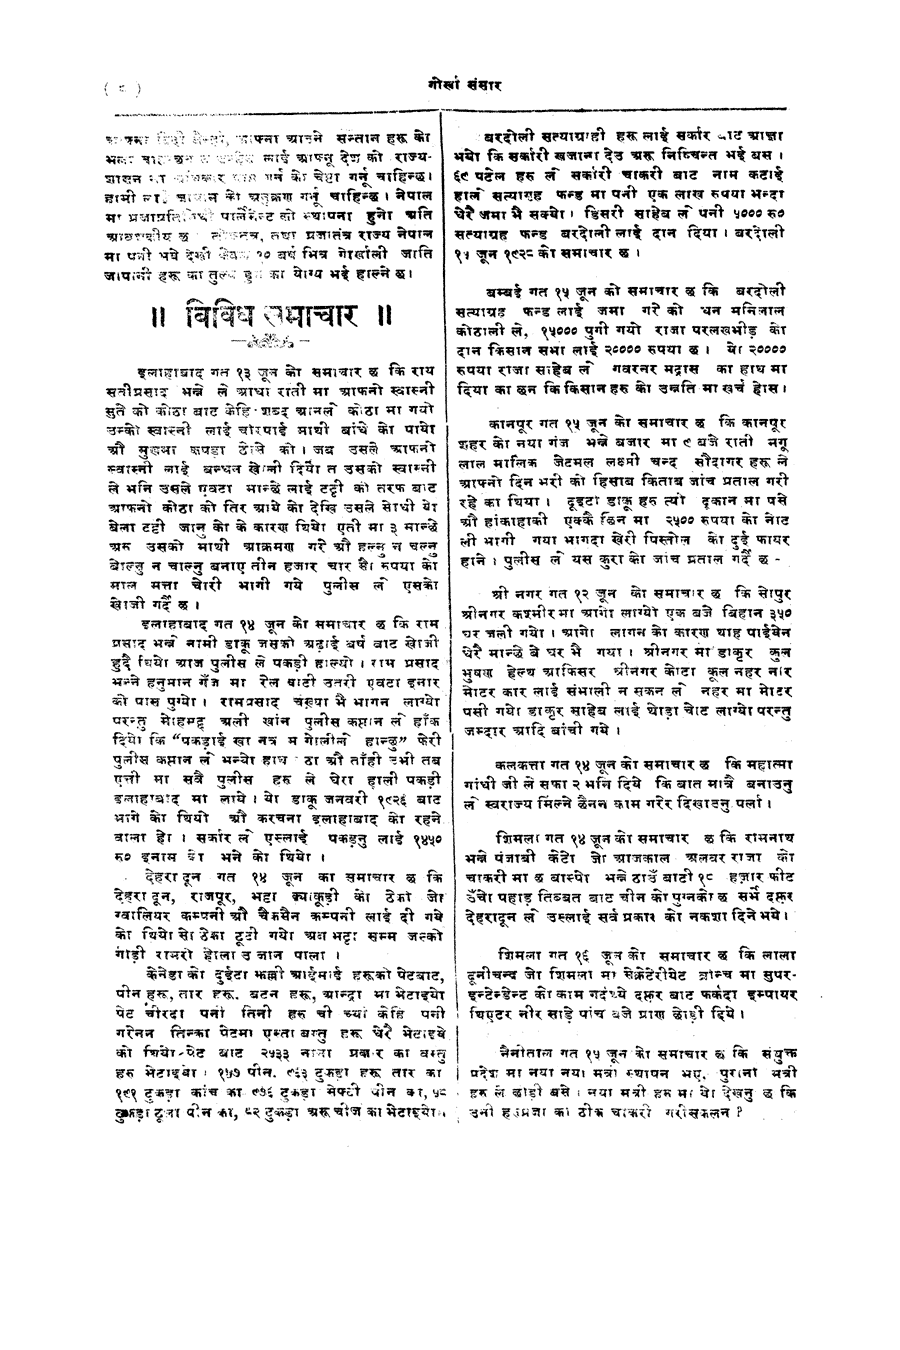 Gorkha Sansar, 22 June 1928, page 8